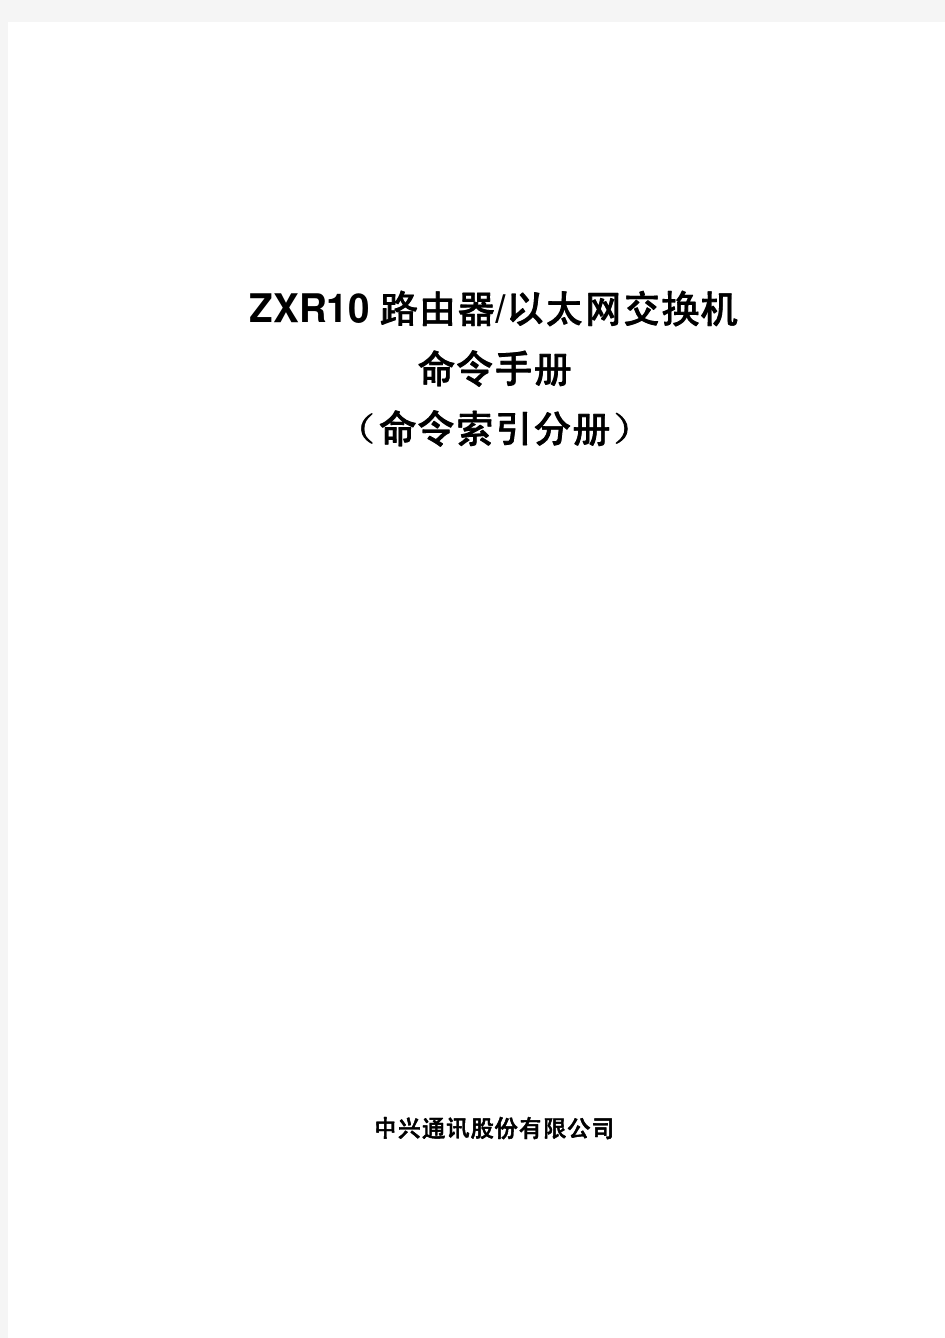 ZXR10 路由器 以太网交换机 (V4.8.20)命令手册 (命令索引分册)